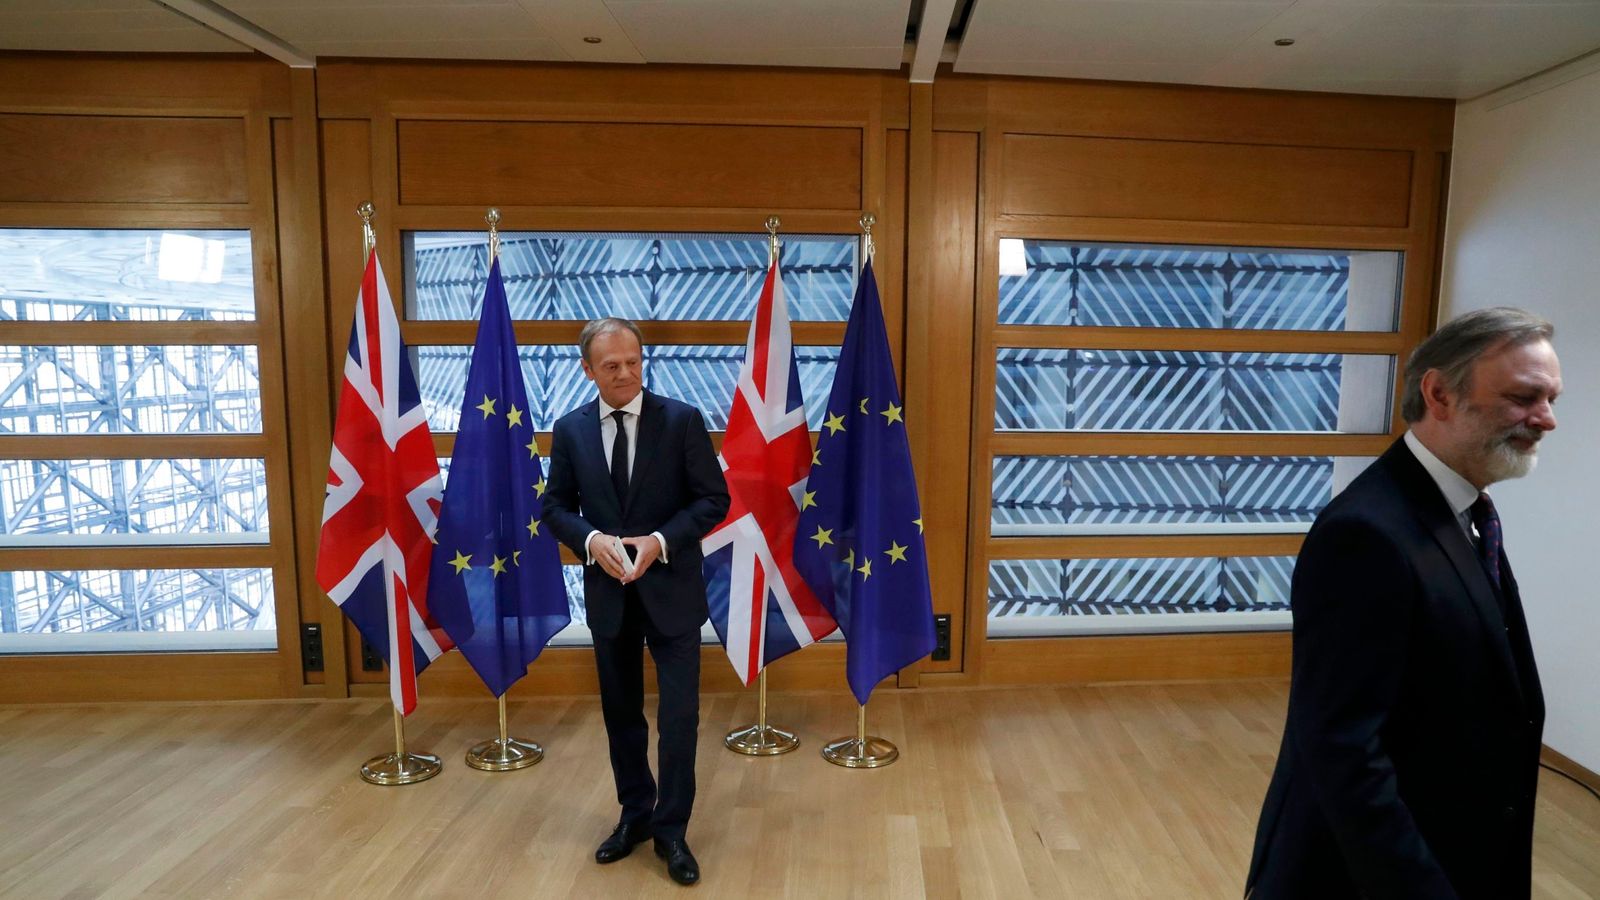 Article 50 triggered: Formal Brexit process begins | Politics News ...